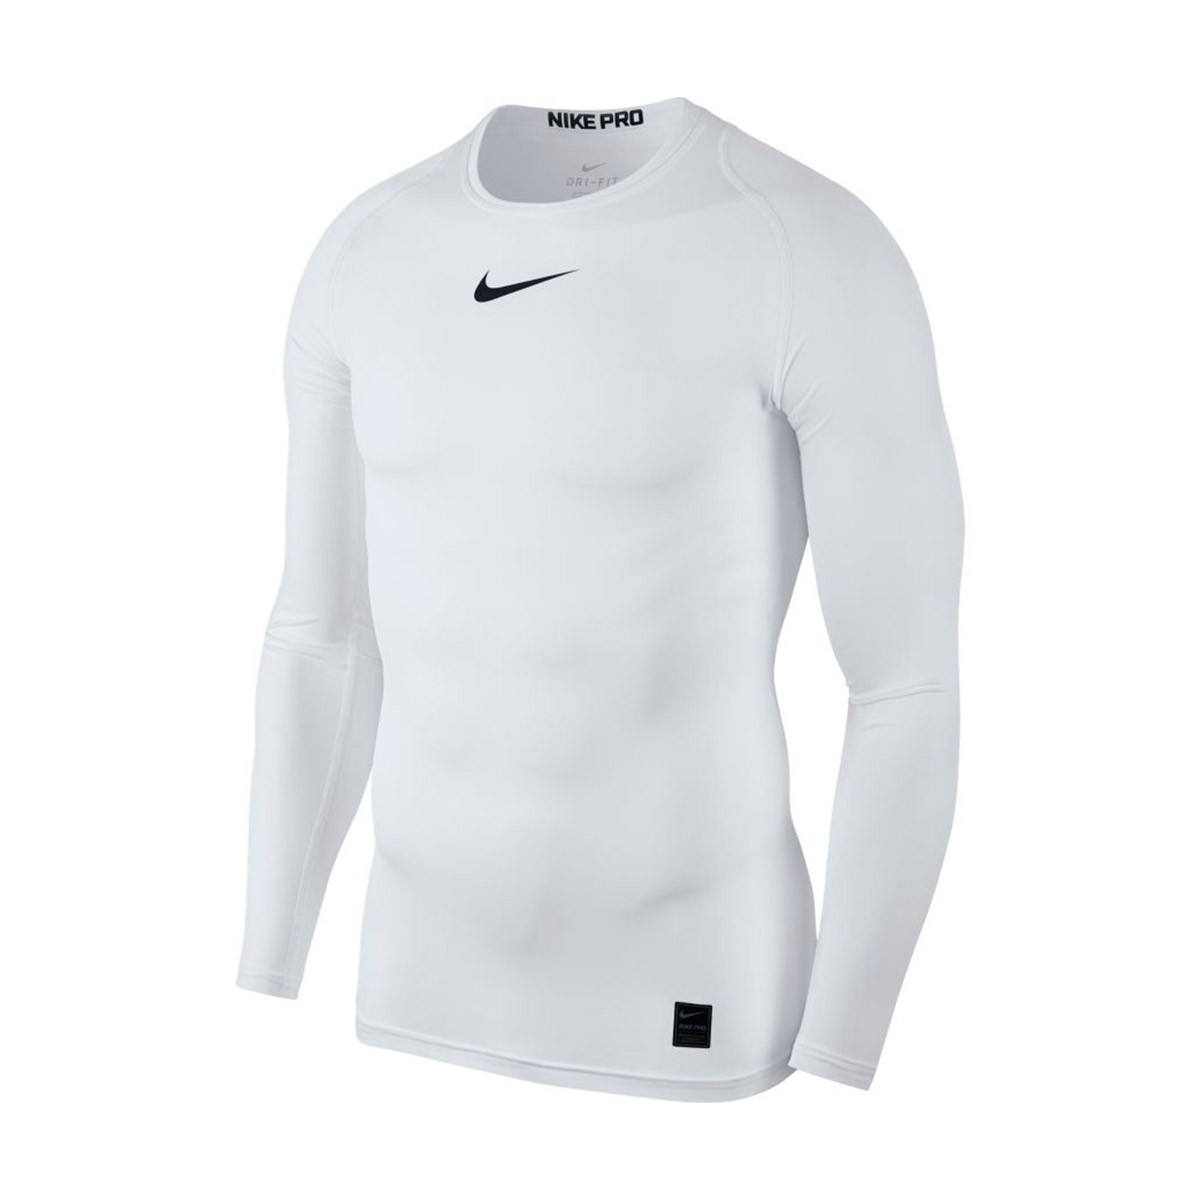 Contestar el teléfono Torrente Comorama Camiseta Nike Pro Top White-Black - Fútbol Emotion